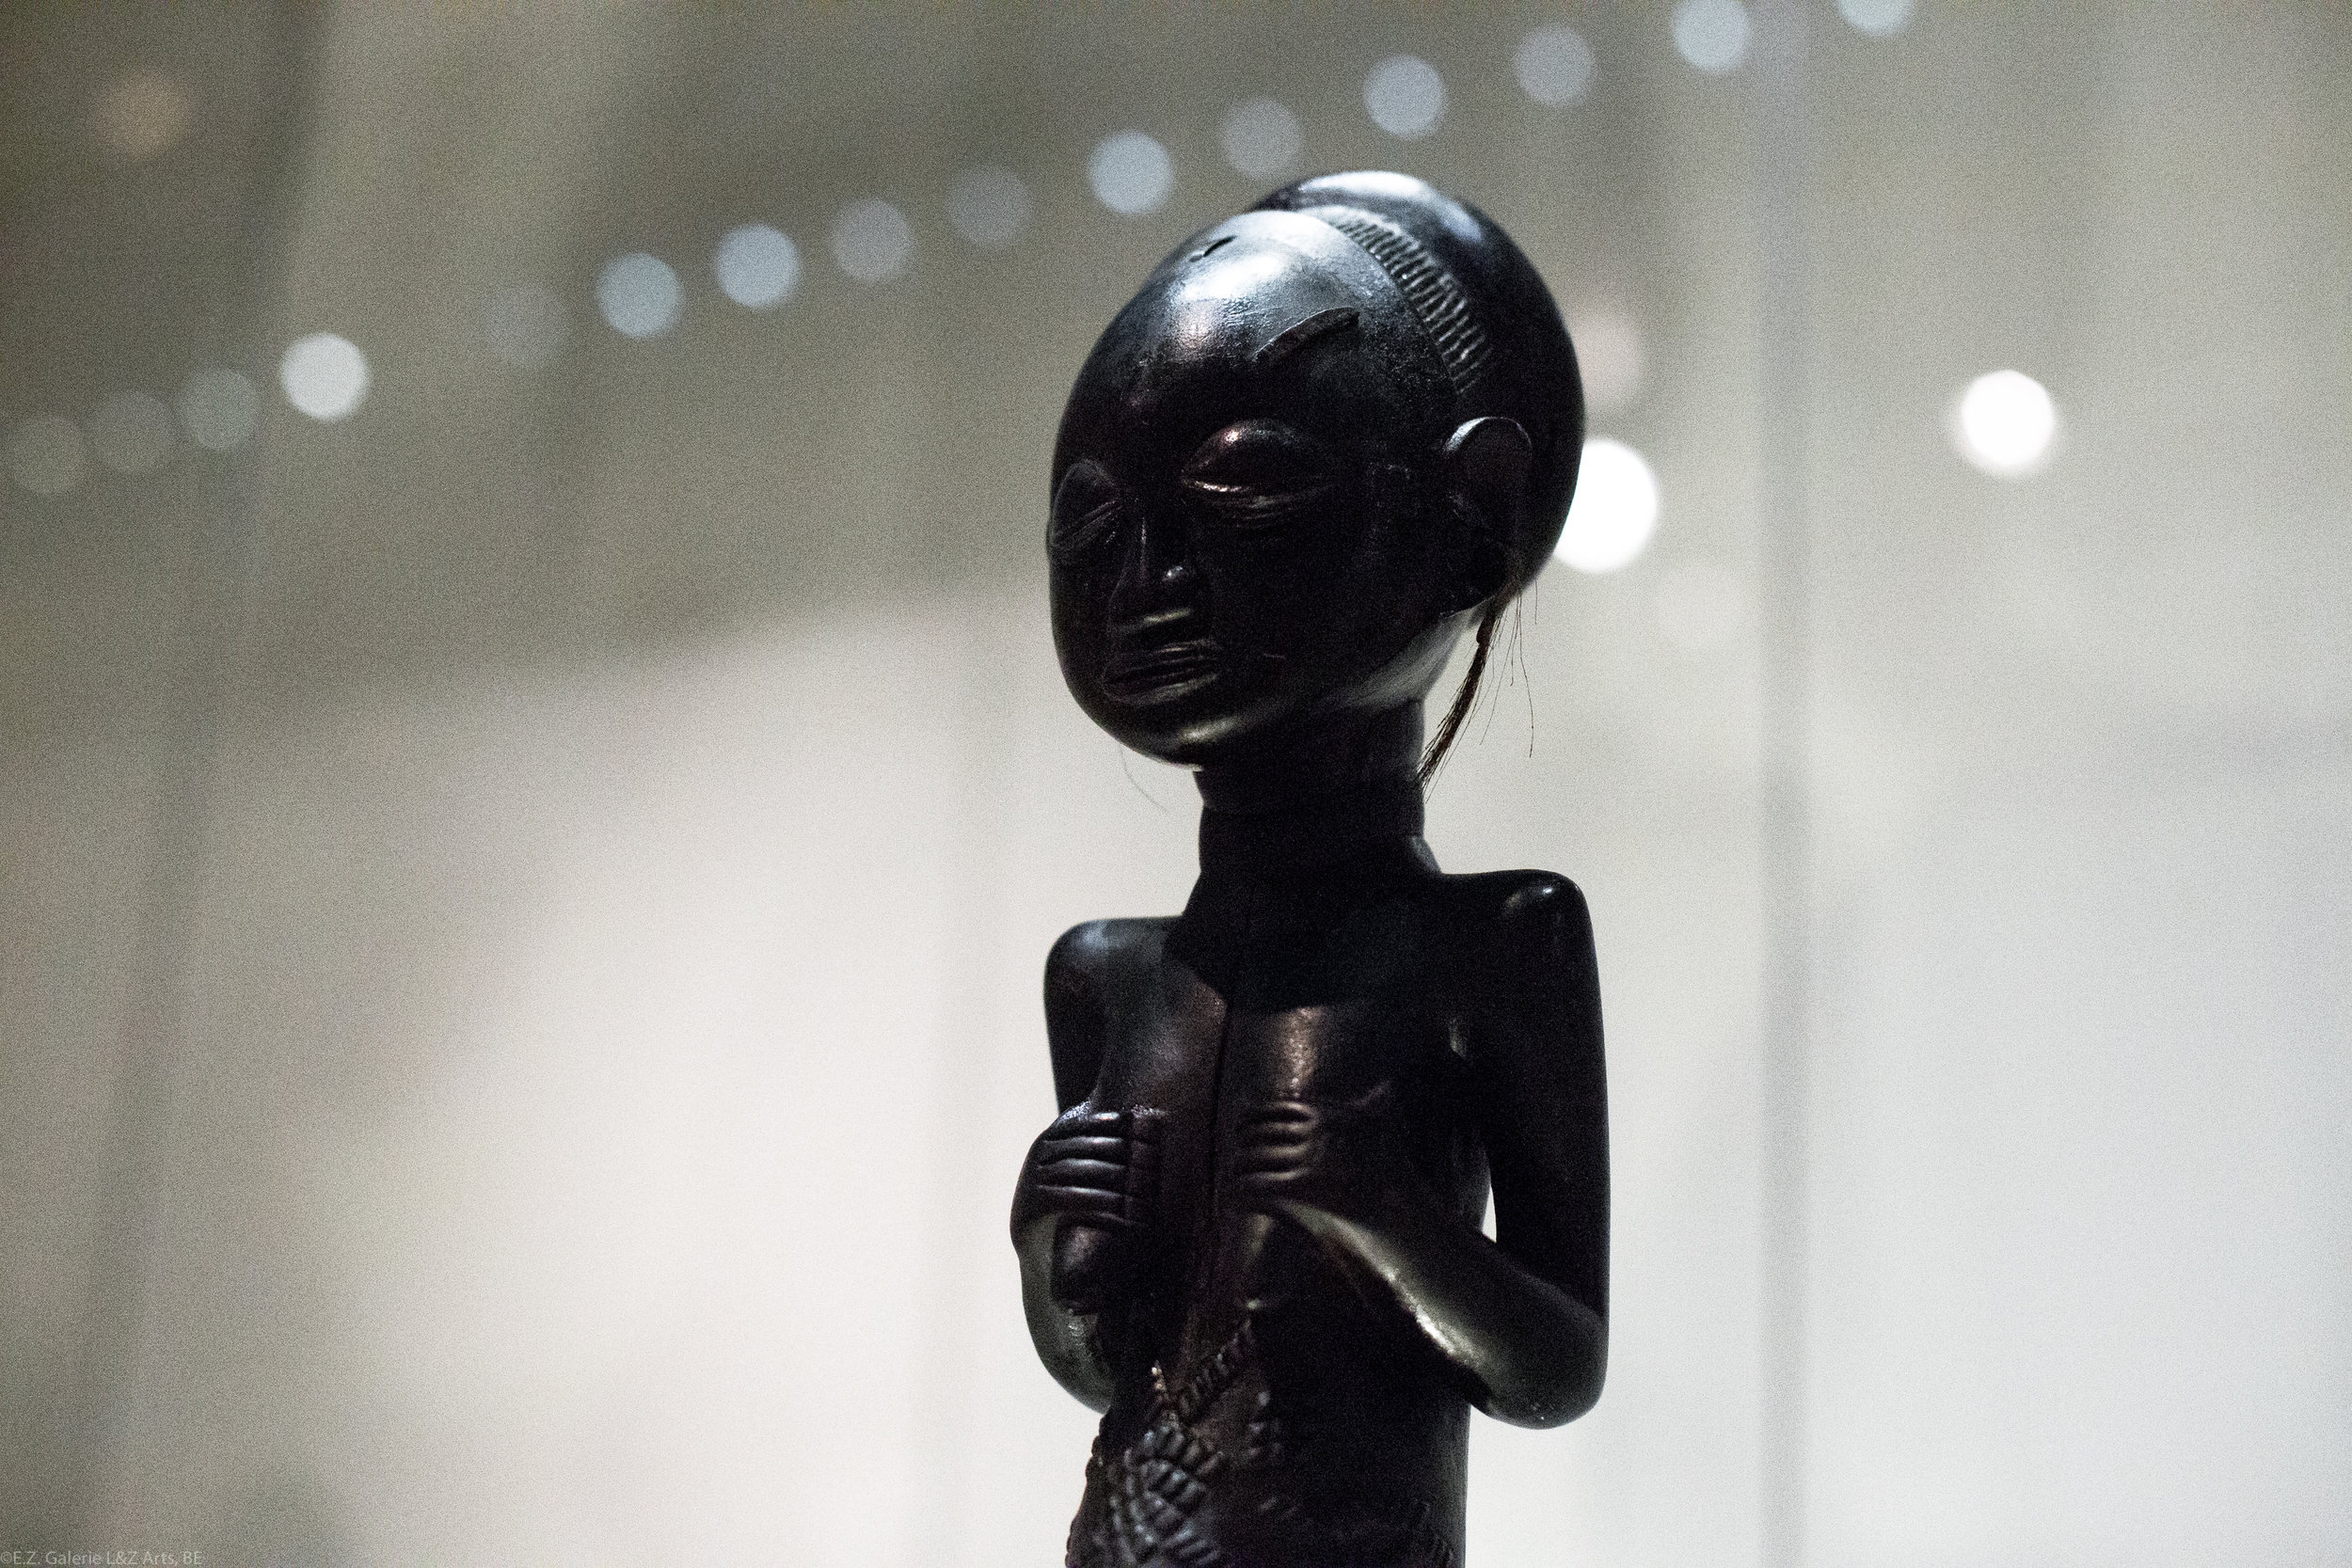 art-tribal-africain-londres-british-museum-sainsbury-galleries-bronze-benin-statue-masque-ivoire-africa-london-bini-edo-galerie-lz-arts-belgique-france-19.jpg